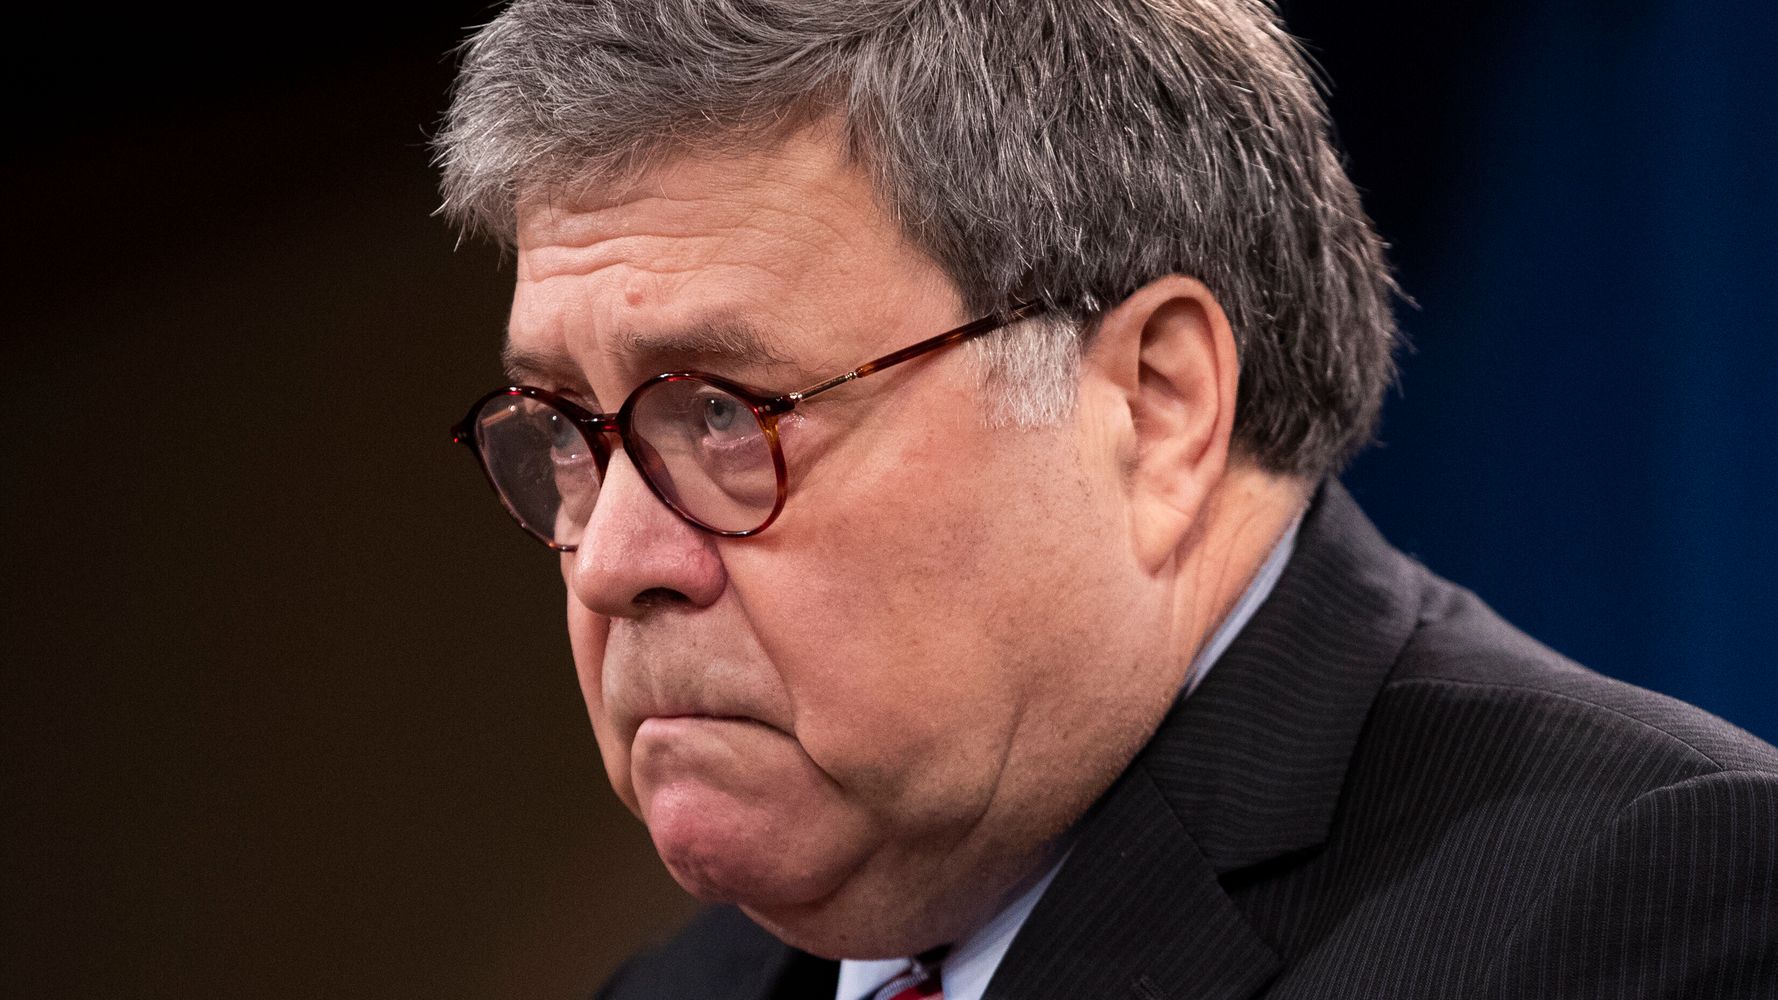 Senate Leaders Demand Bill Barr, Jeff Sessions Testify About 'Shocking' Trump Data Seizure